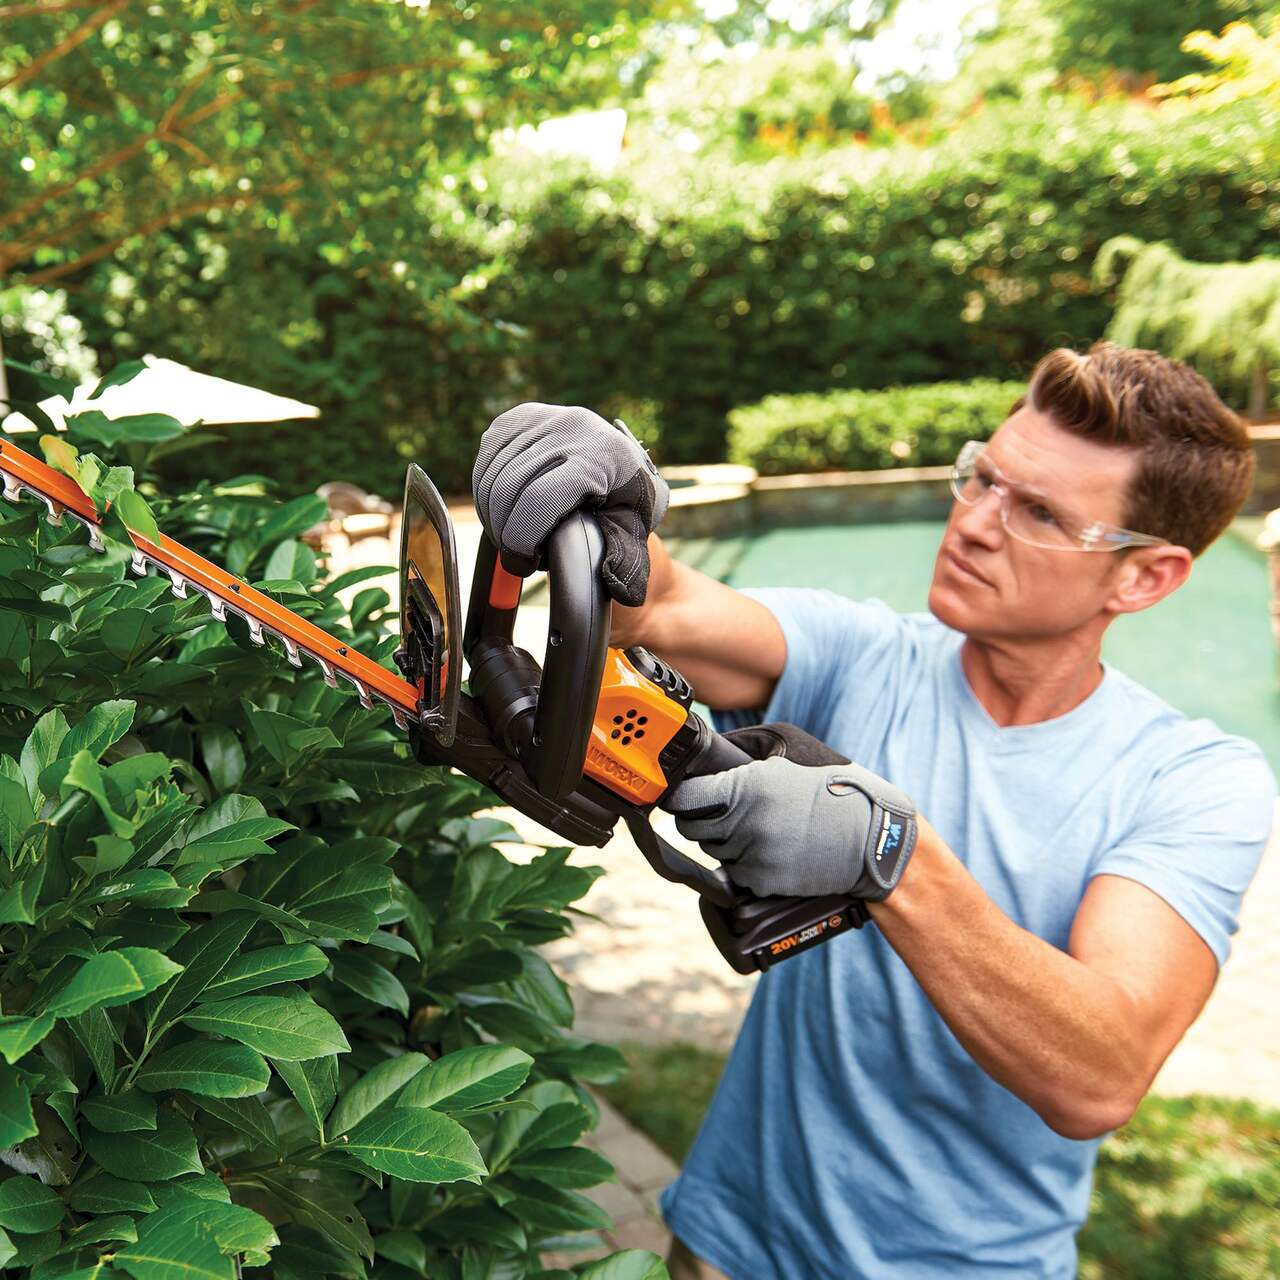 https://media-www.canadiantire.ca/product/seasonal-gardening/outdoor-tools/hand-held-outdoor-power-tools/0602364/worx-20v-20-hedge-trimmer--6d3f8c2a-e0ae-4601-9b31-852b526c4713-jpgrendition.jpg?imdensity=1&imwidth=1244&impolicy=mZoom